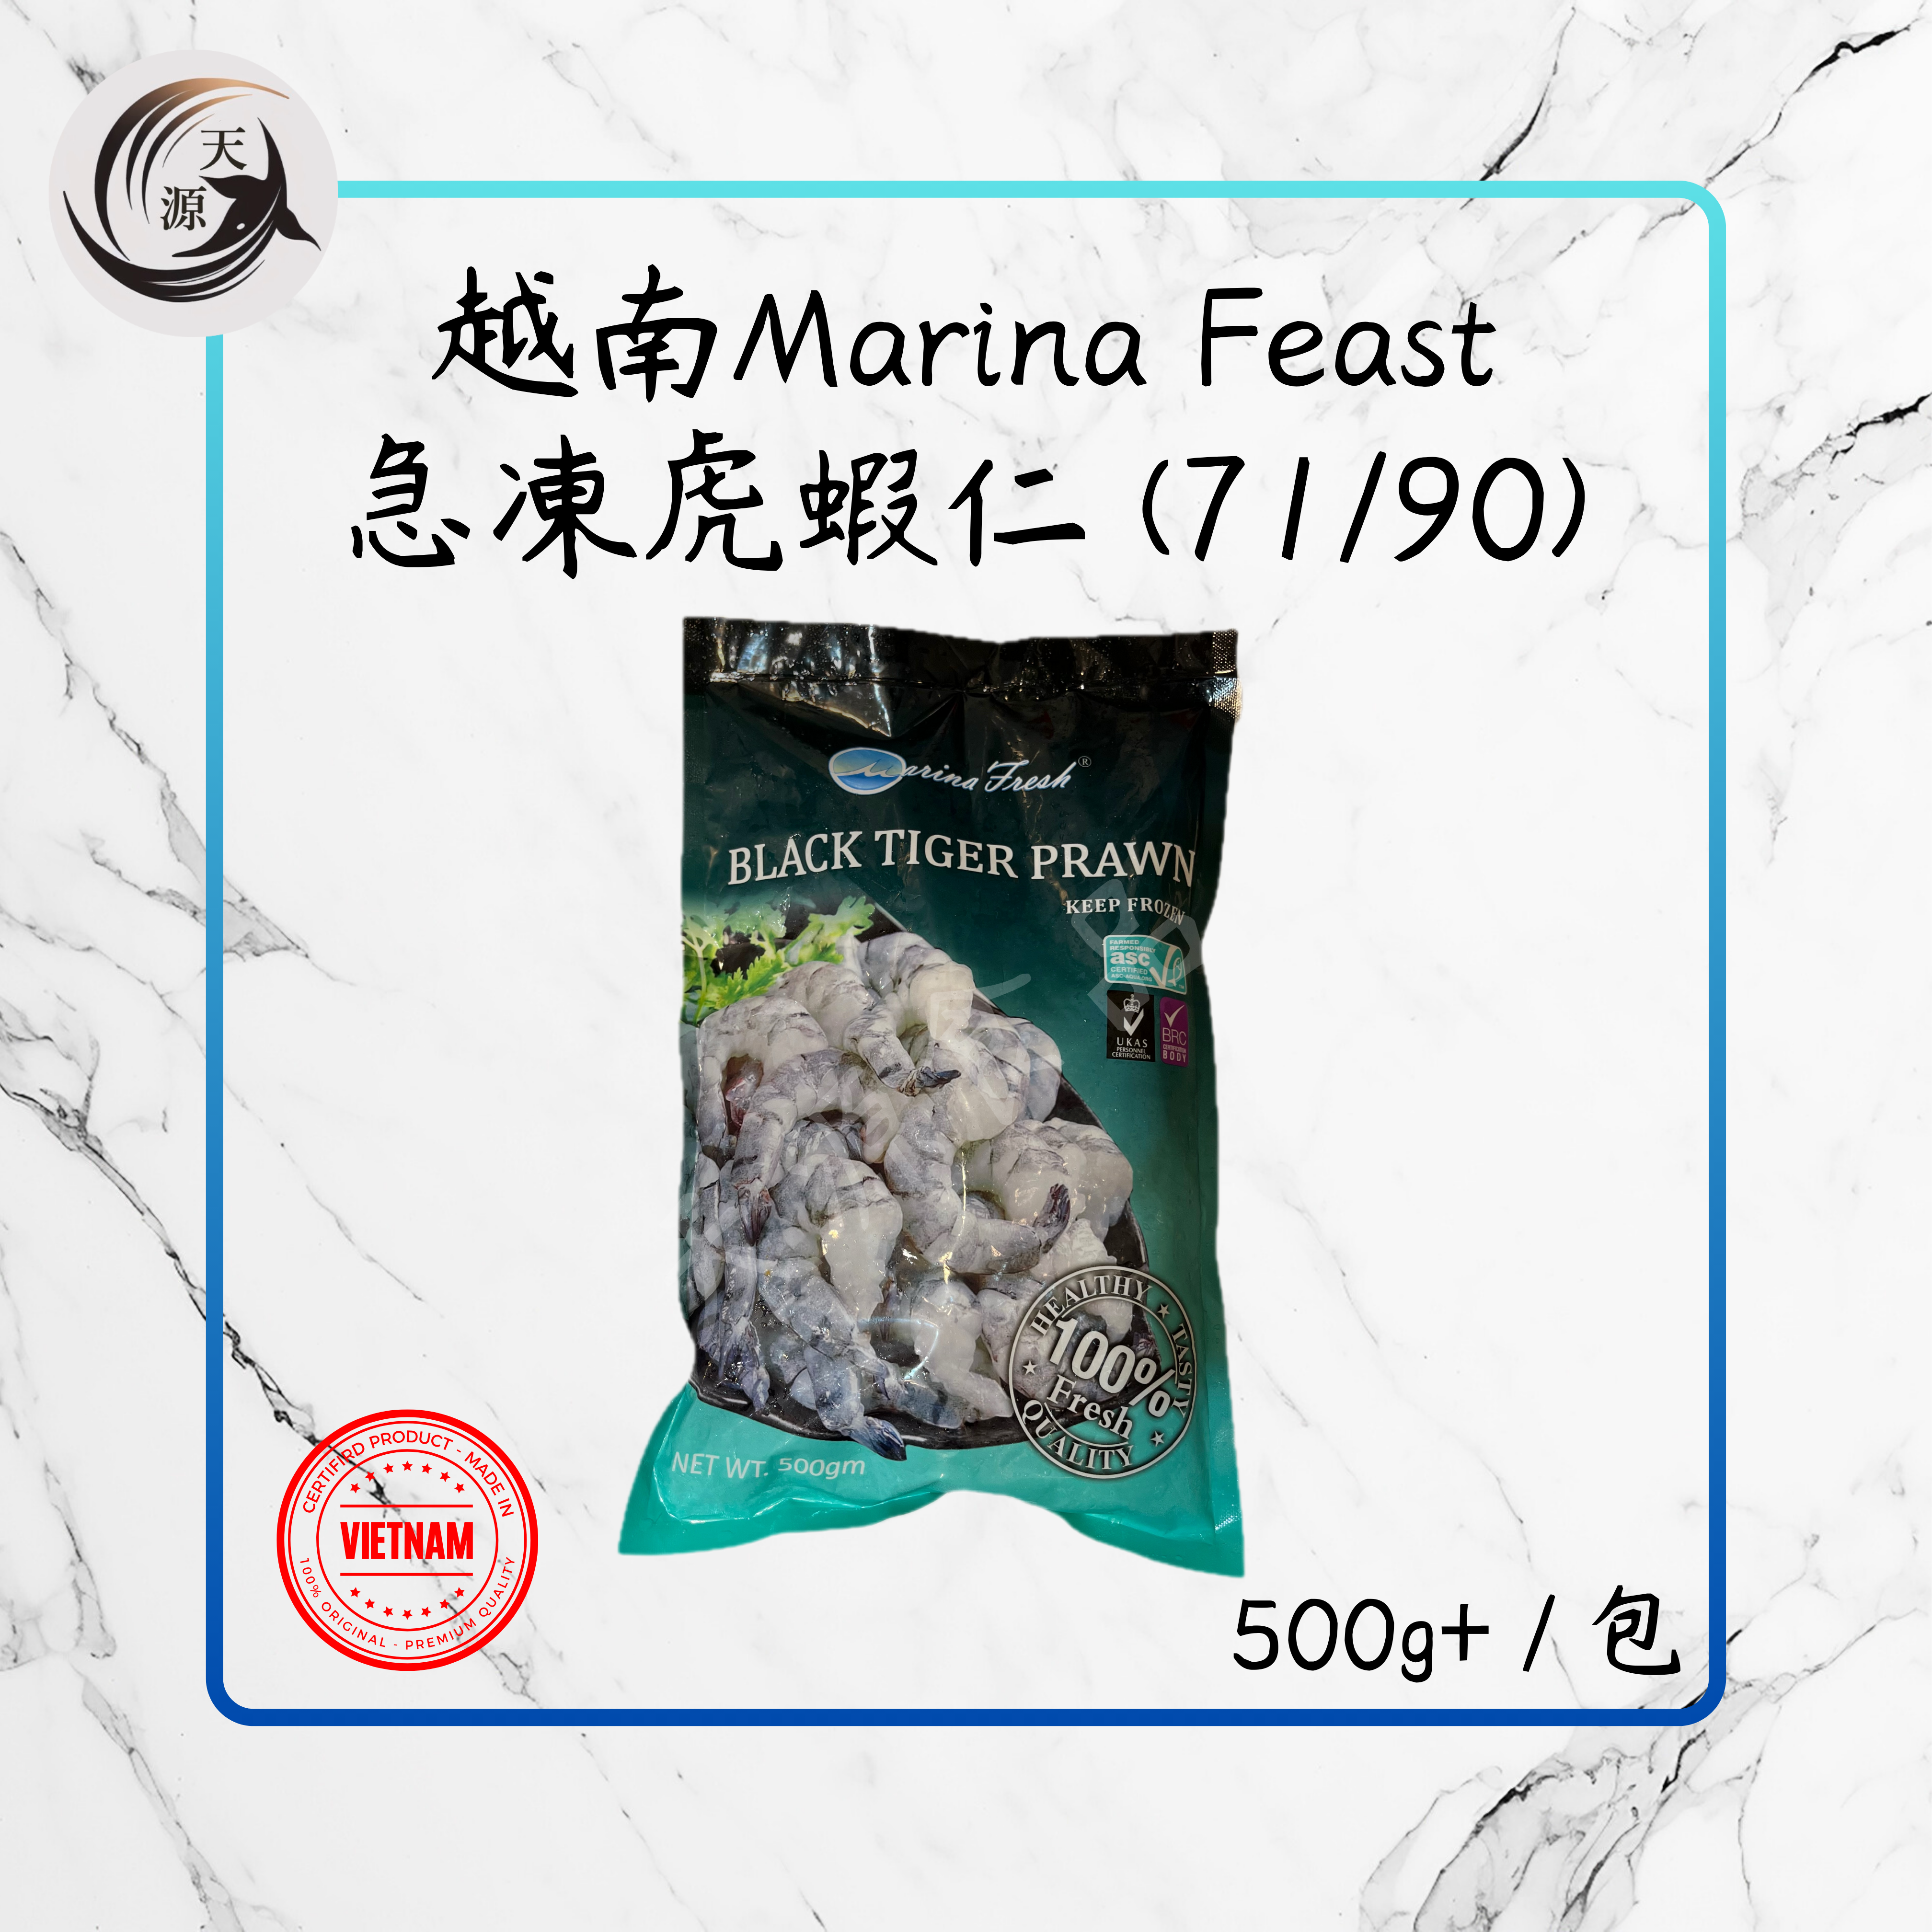 Vietnam Marina Feast frozen tiger shrimp (71/90) 500g